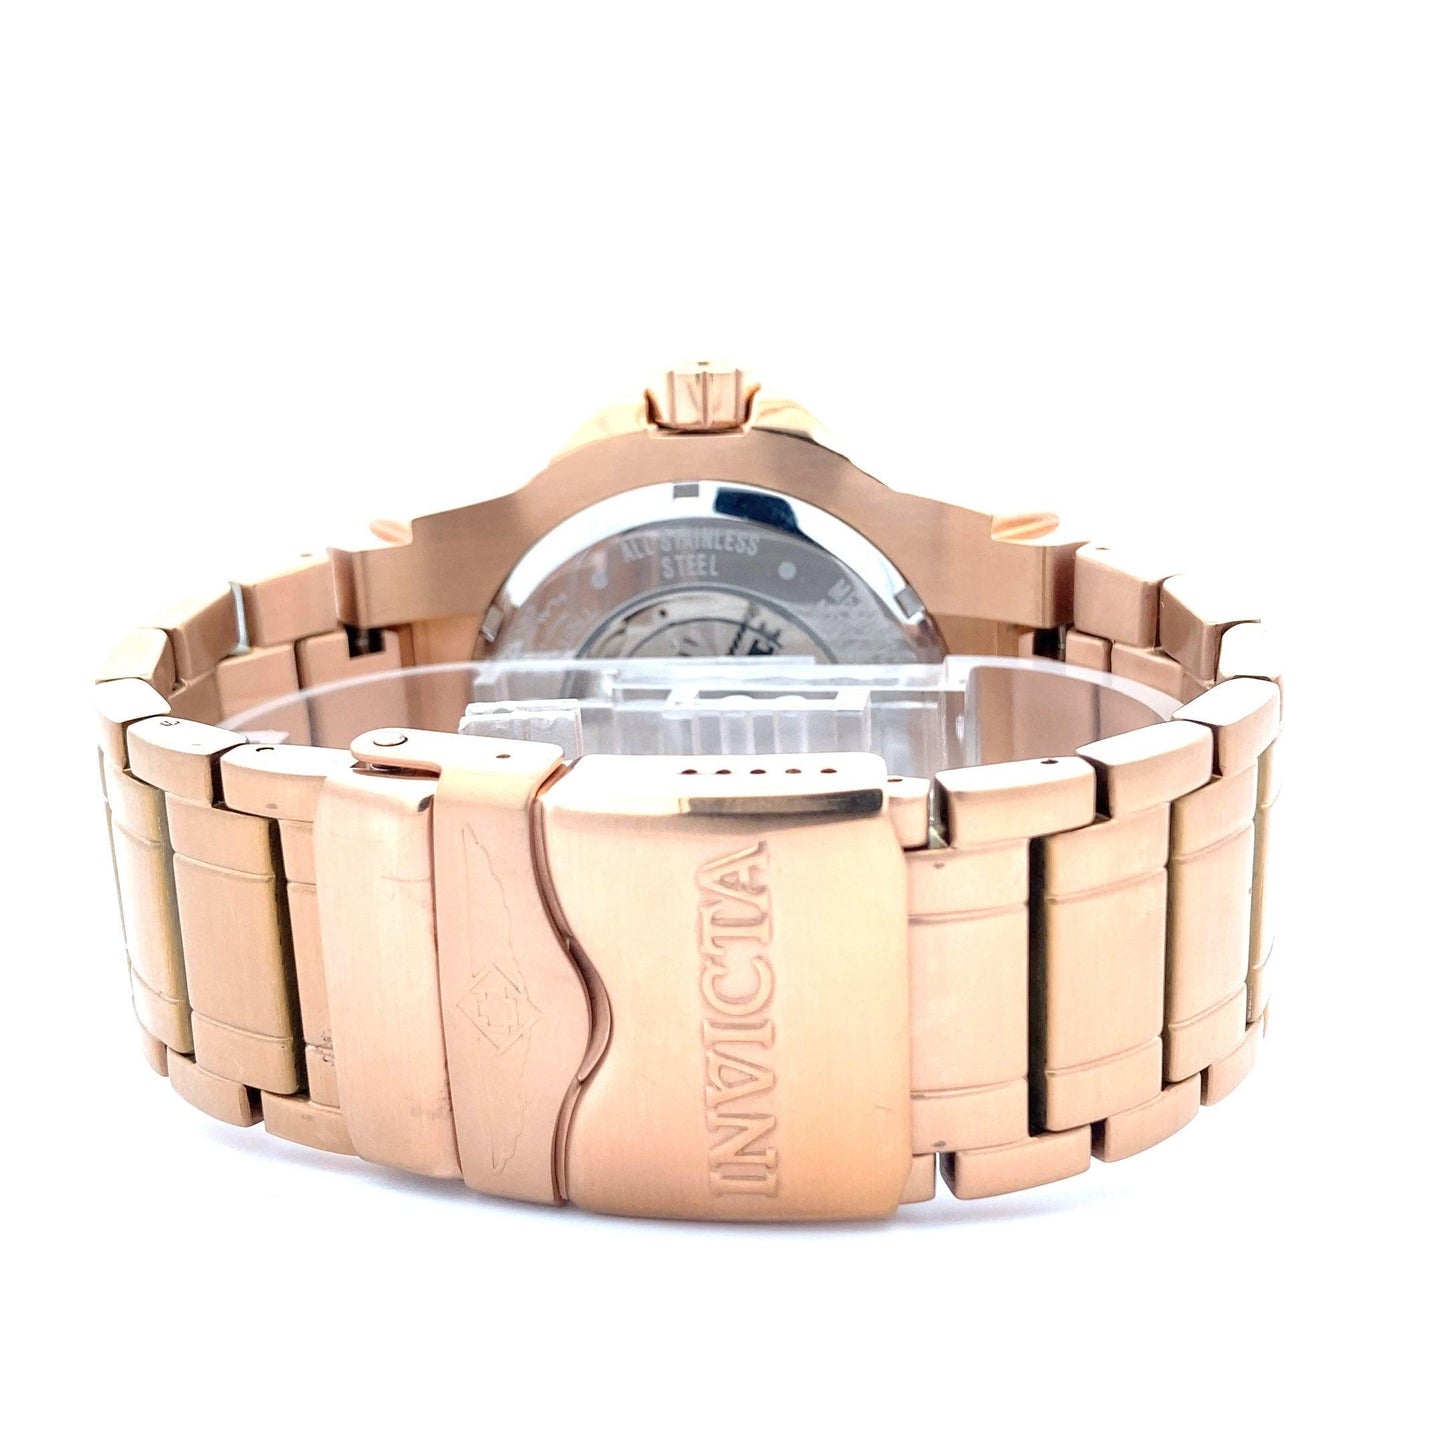 Invicta Model 31948 Automatic Men's Watch With Original Box & Extra Links - ipawnishop.com